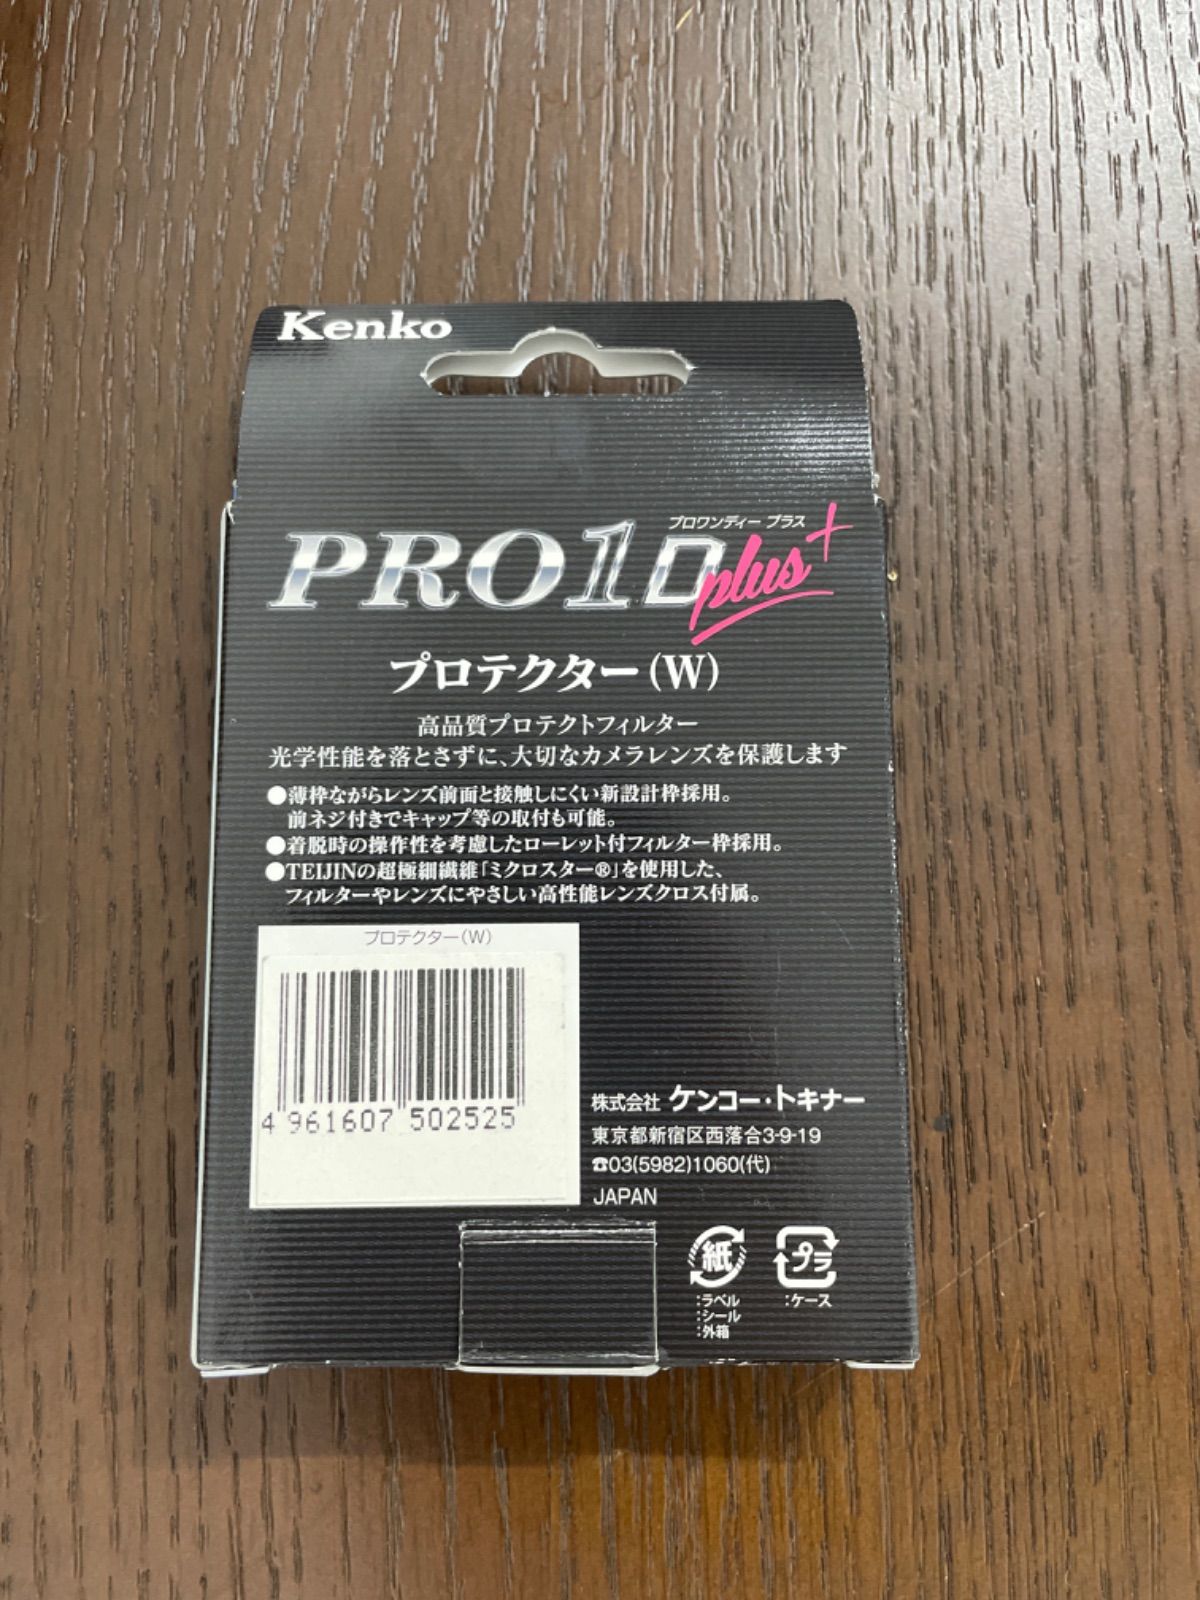 Kenko レンズフィルター PRO1D Plus プロテクター (W) 52mm レンズ保護用 502525 レンズフィルター 